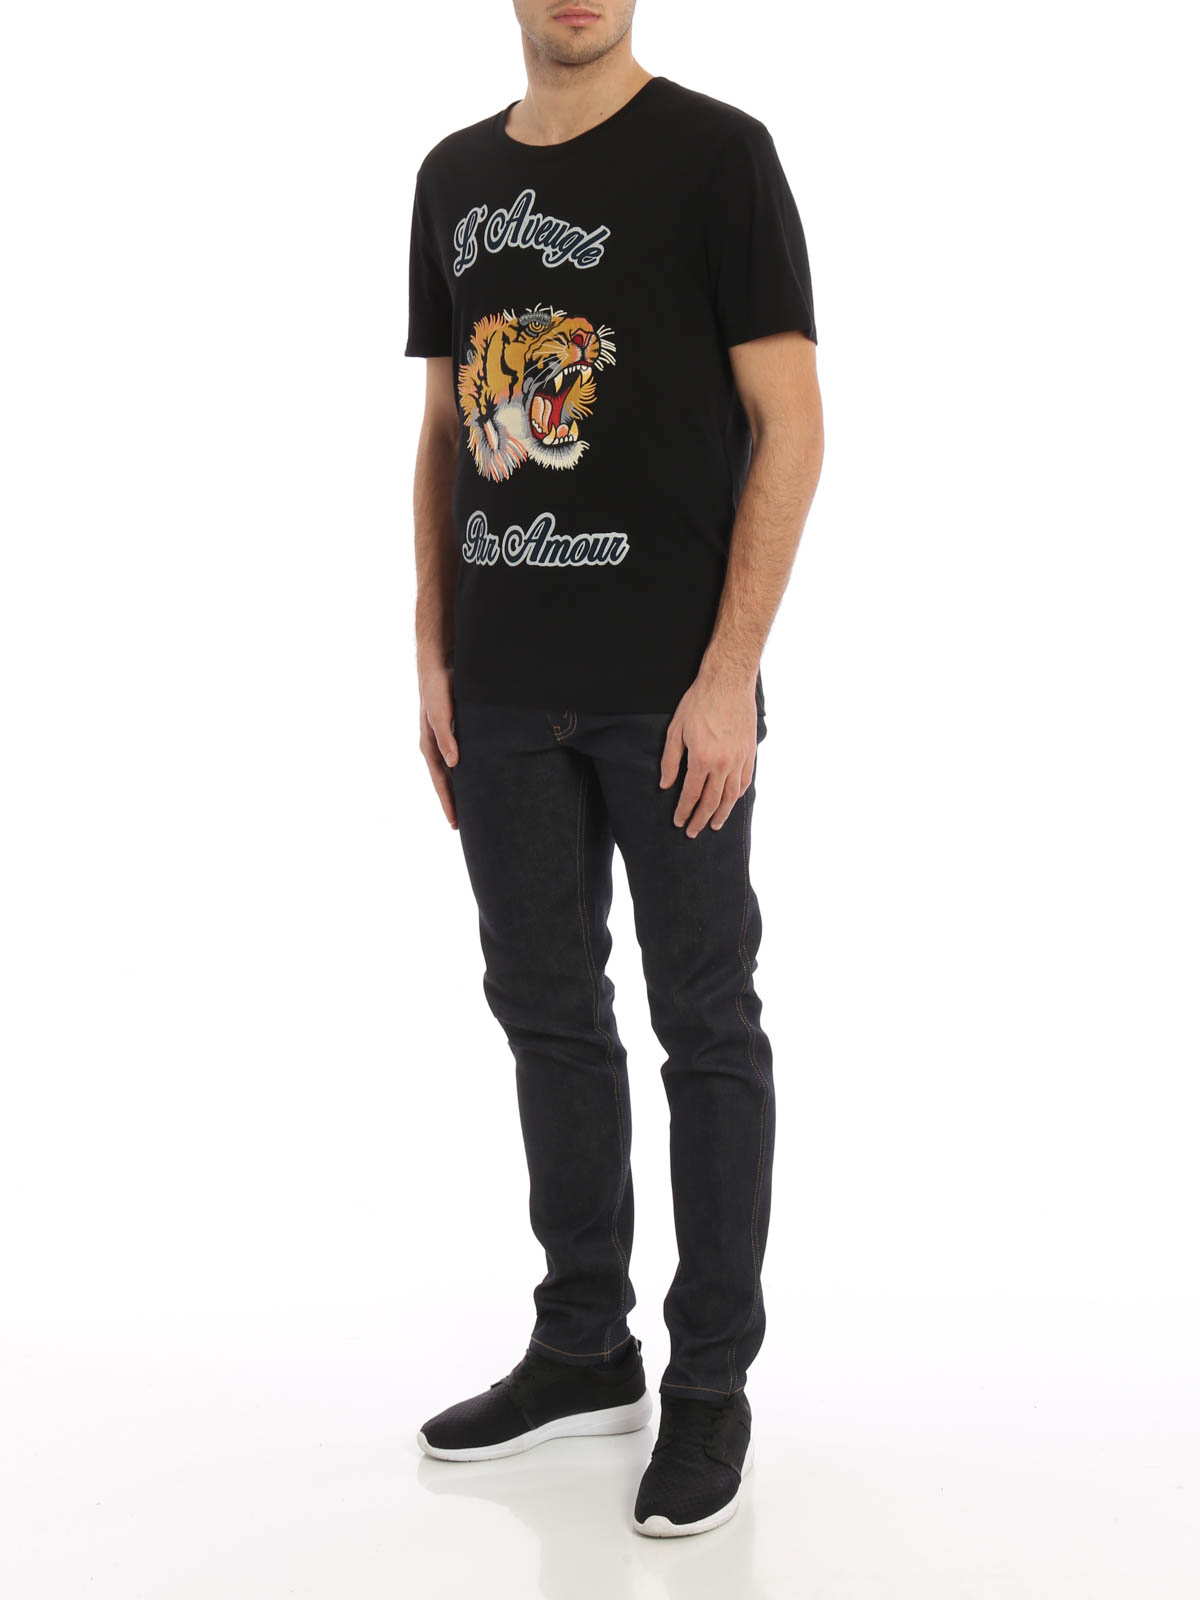 Gucci - Tシャツ メンズ - 黒 - Tシャツ - 430813X5M721082